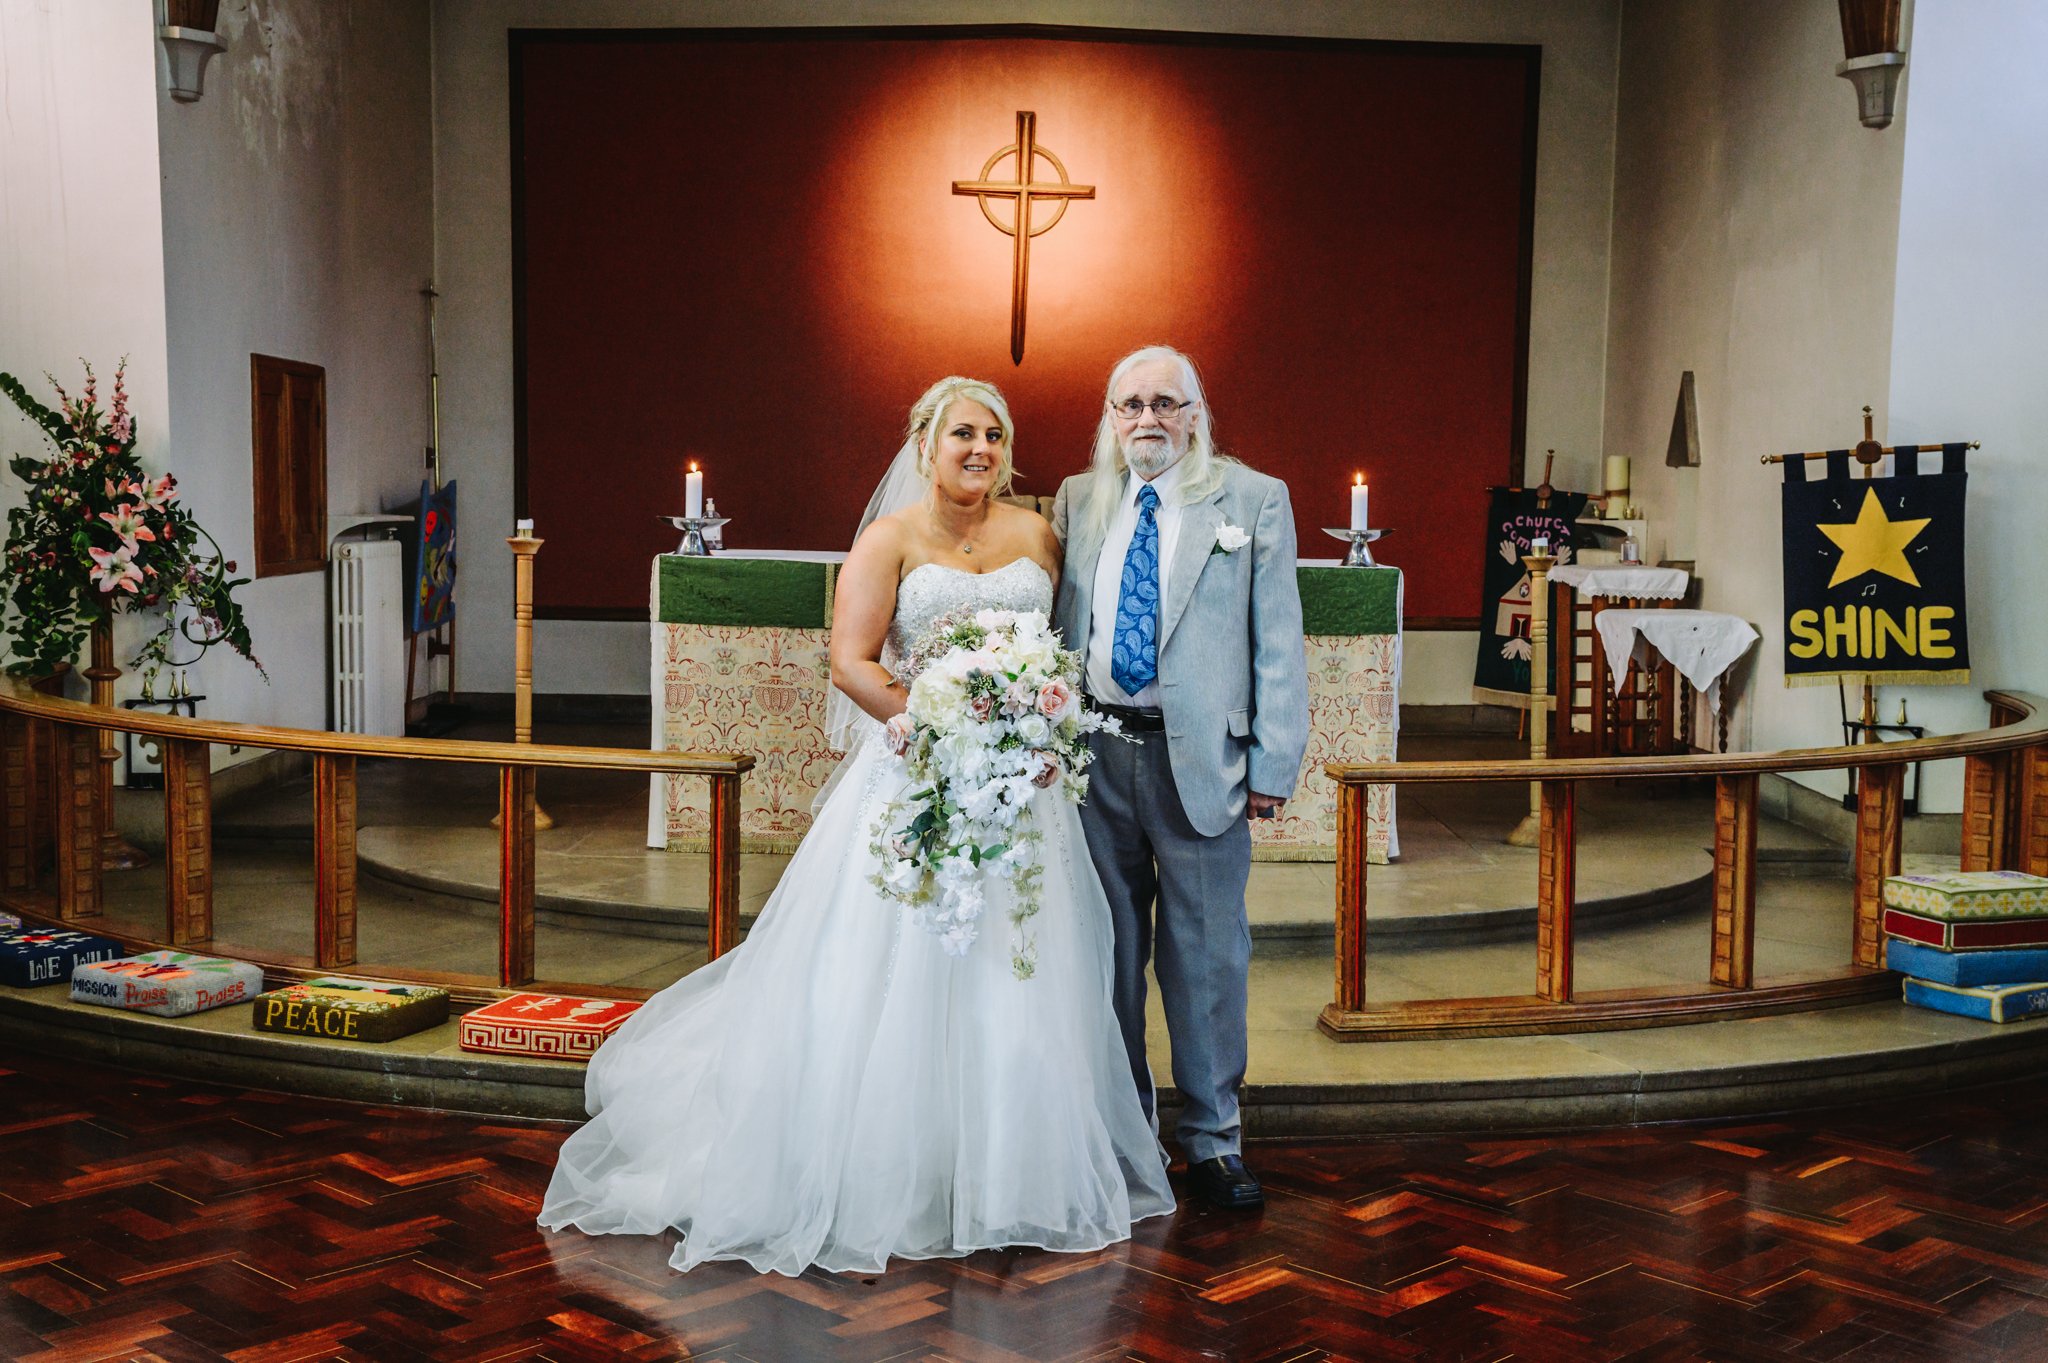 Saint-Clares-Church-Newton-Aycliffe-wedding-photograper (11 of 13).jpg